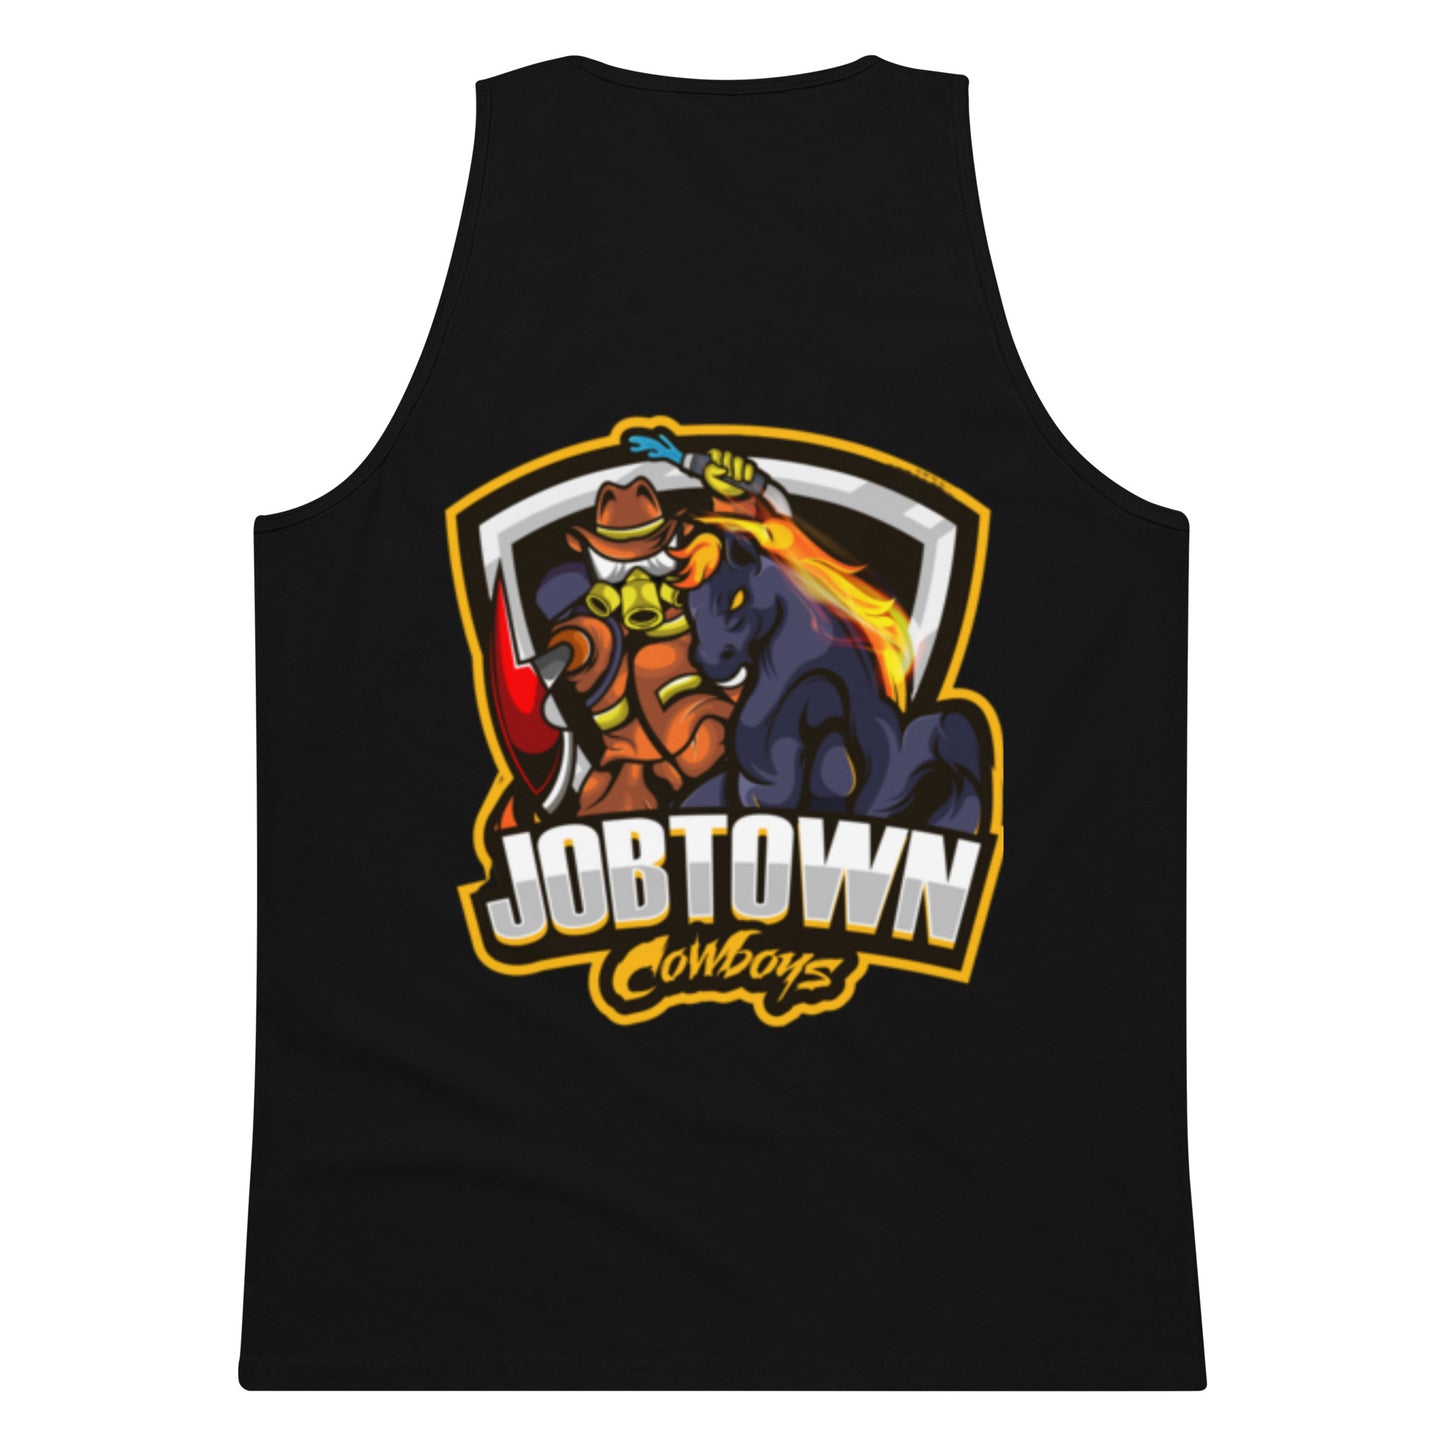 Jobtown Cowboys Firefighter Premium Tank Top- The Original Design